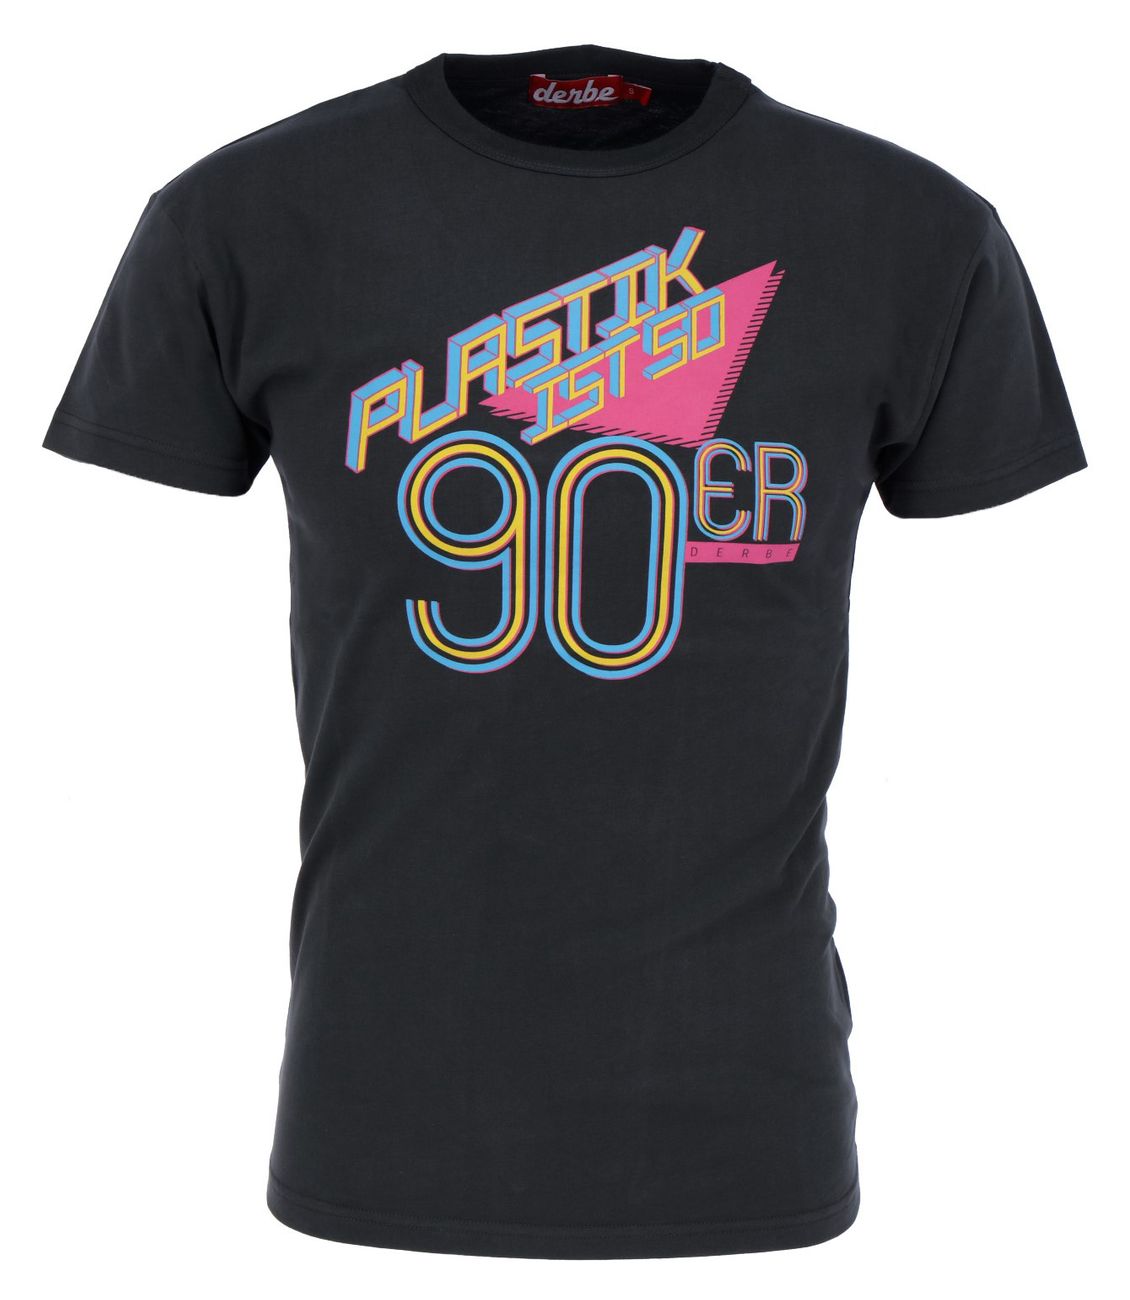 DERBE HAMBURG Plastik ist so 90er Boys Herren T-Shirt - Derbe Hamburg - SAGATOO - 4257634130450